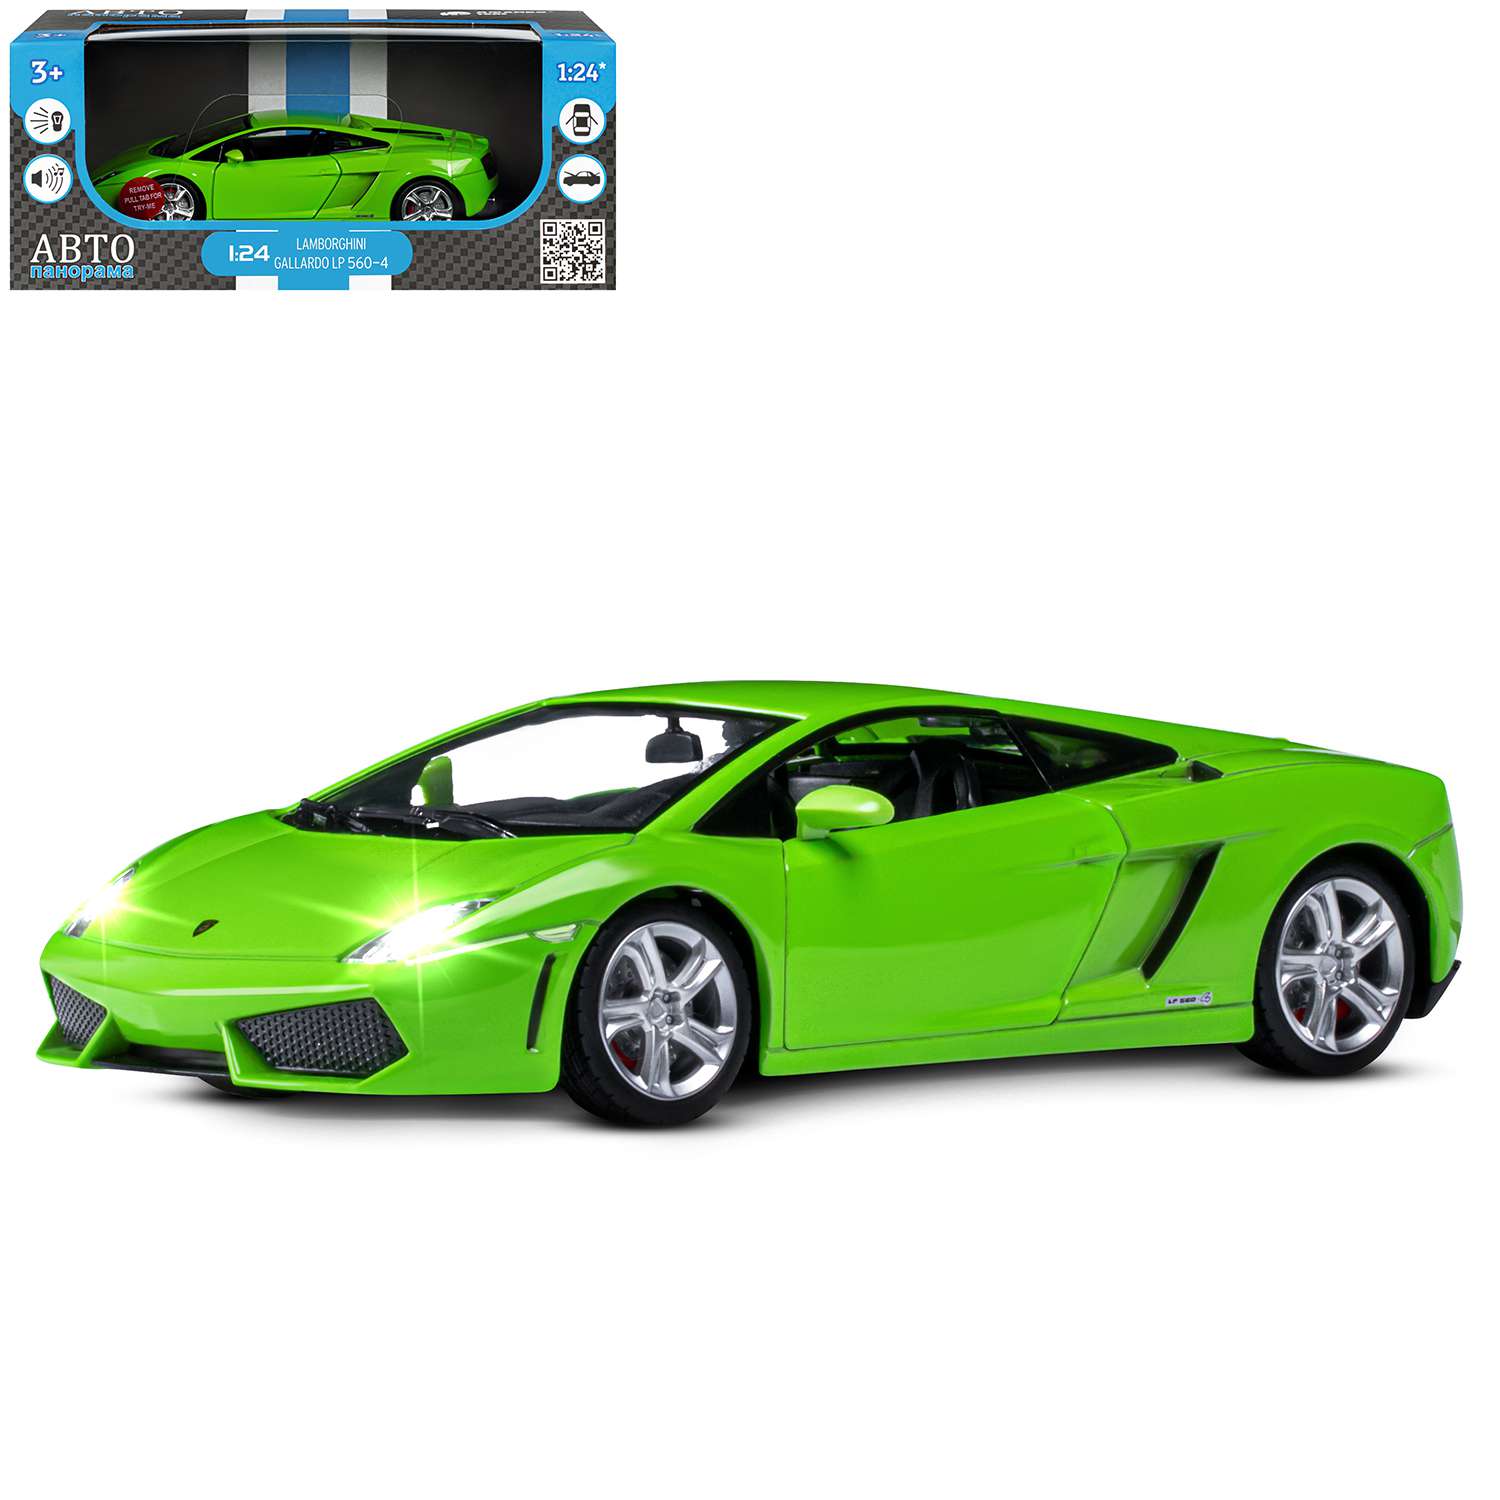 Машина JB1251382 Lamborghini Gallardo LP560-4 металл 1:24 зеленый свет, звук ТМ Автопанорама - Магнитогорск 